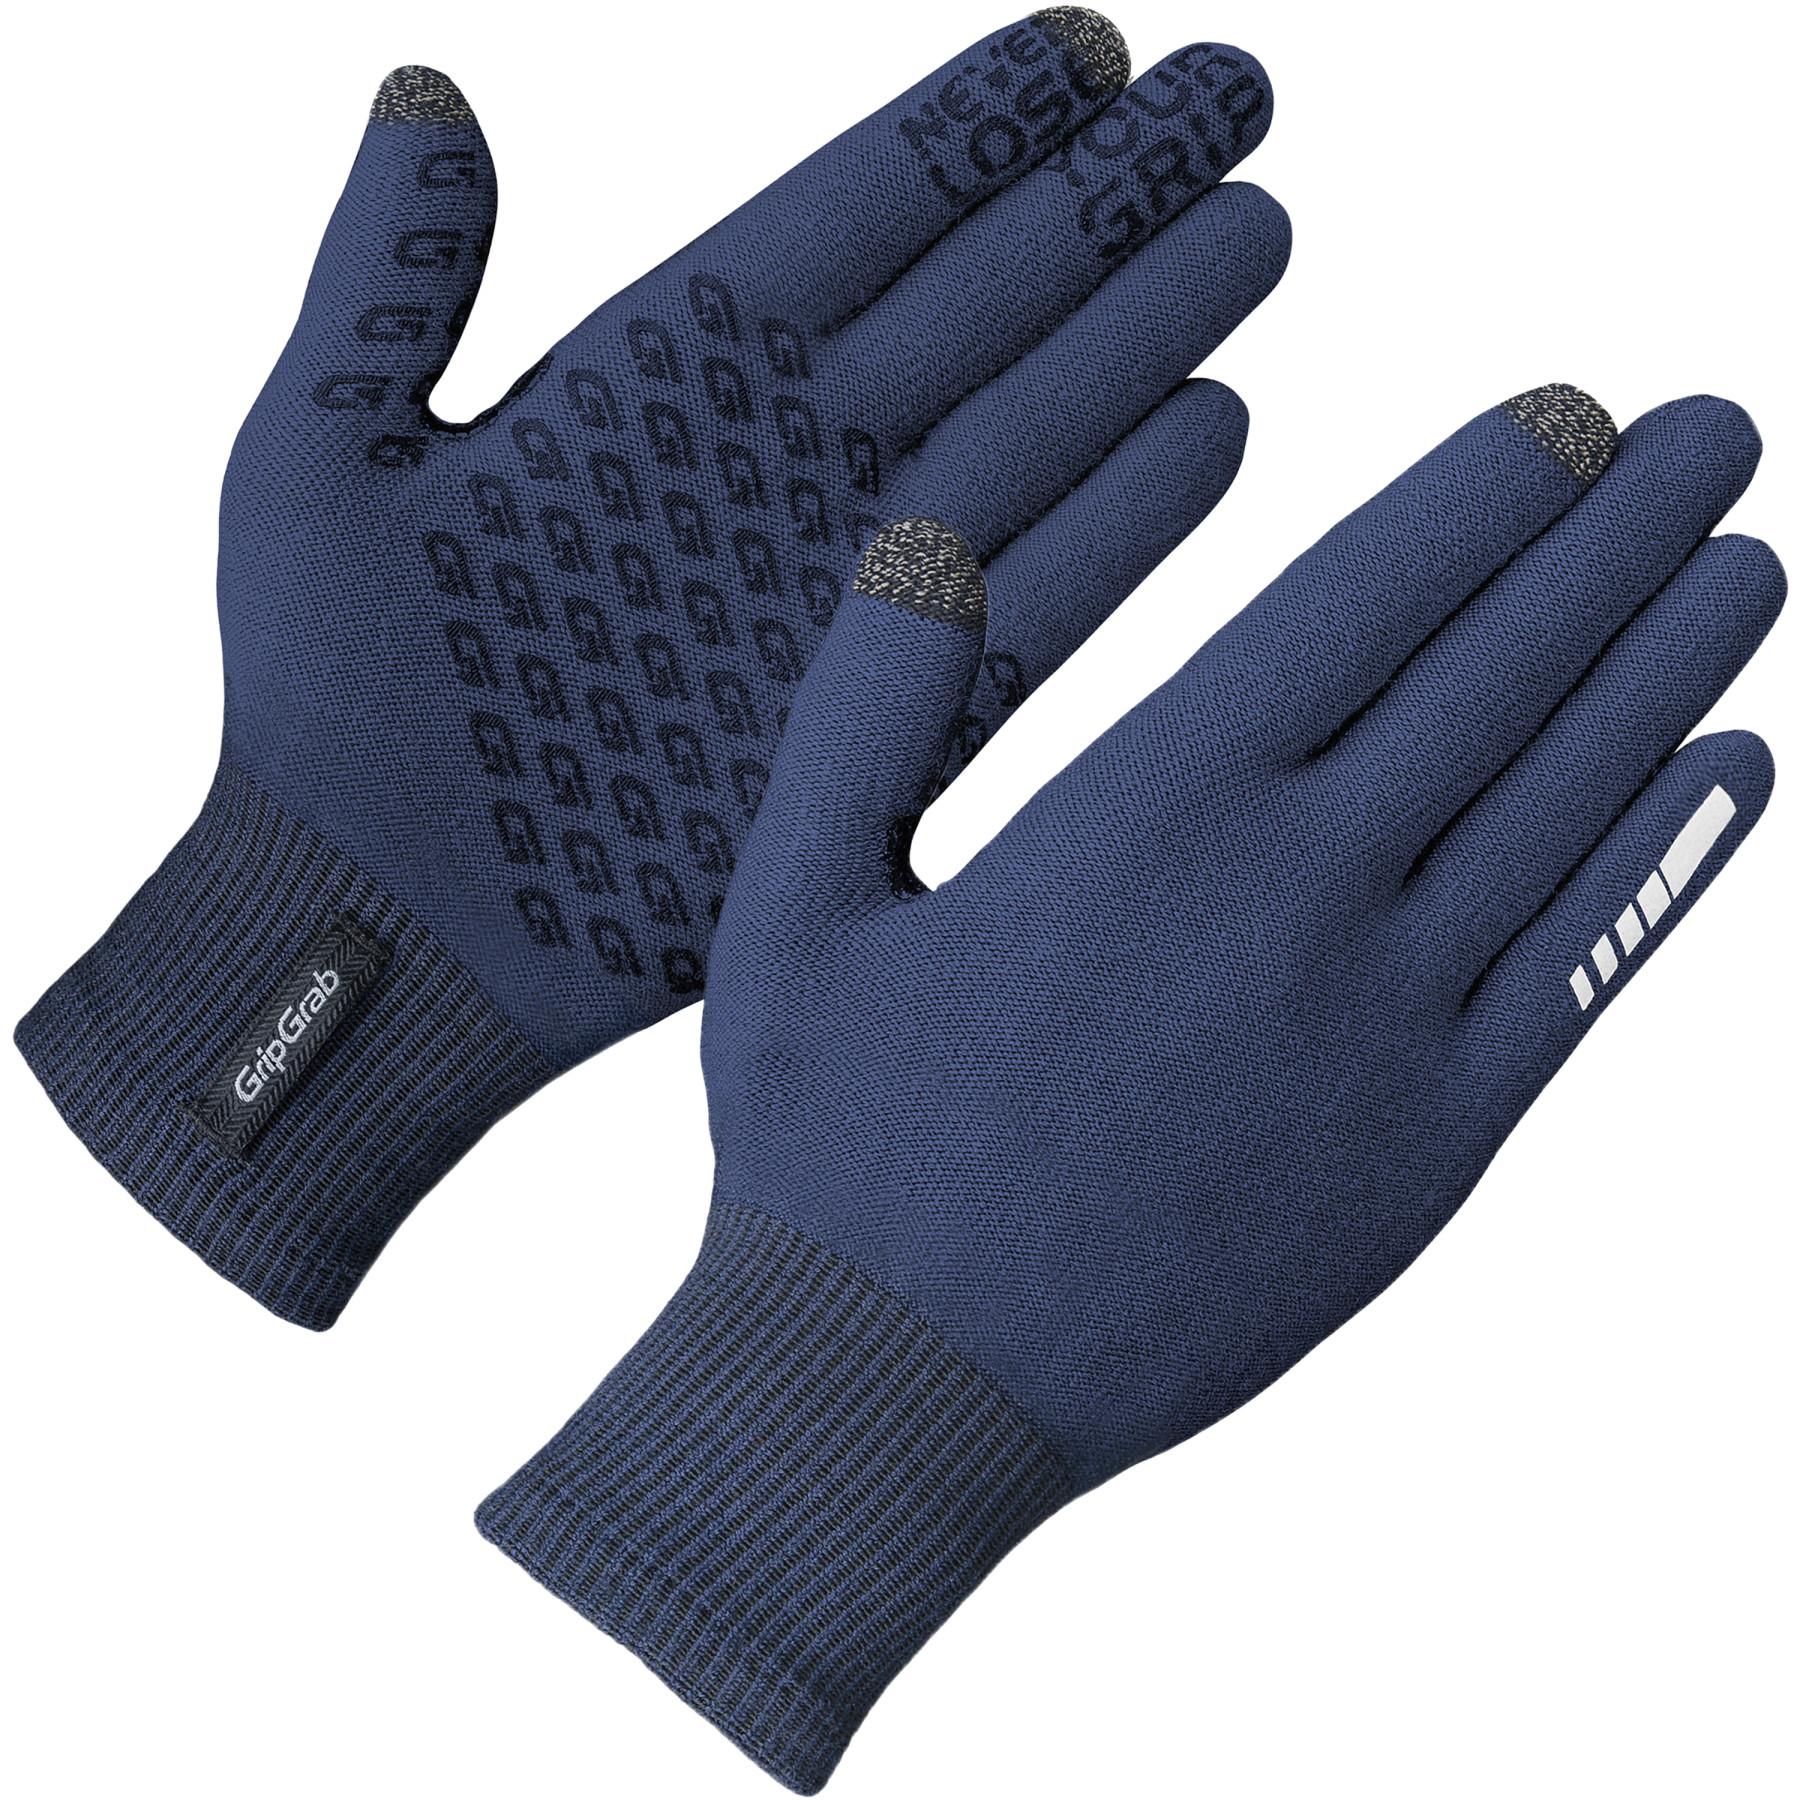 Gripgrab Primavera Merino Glove Ii - Navy